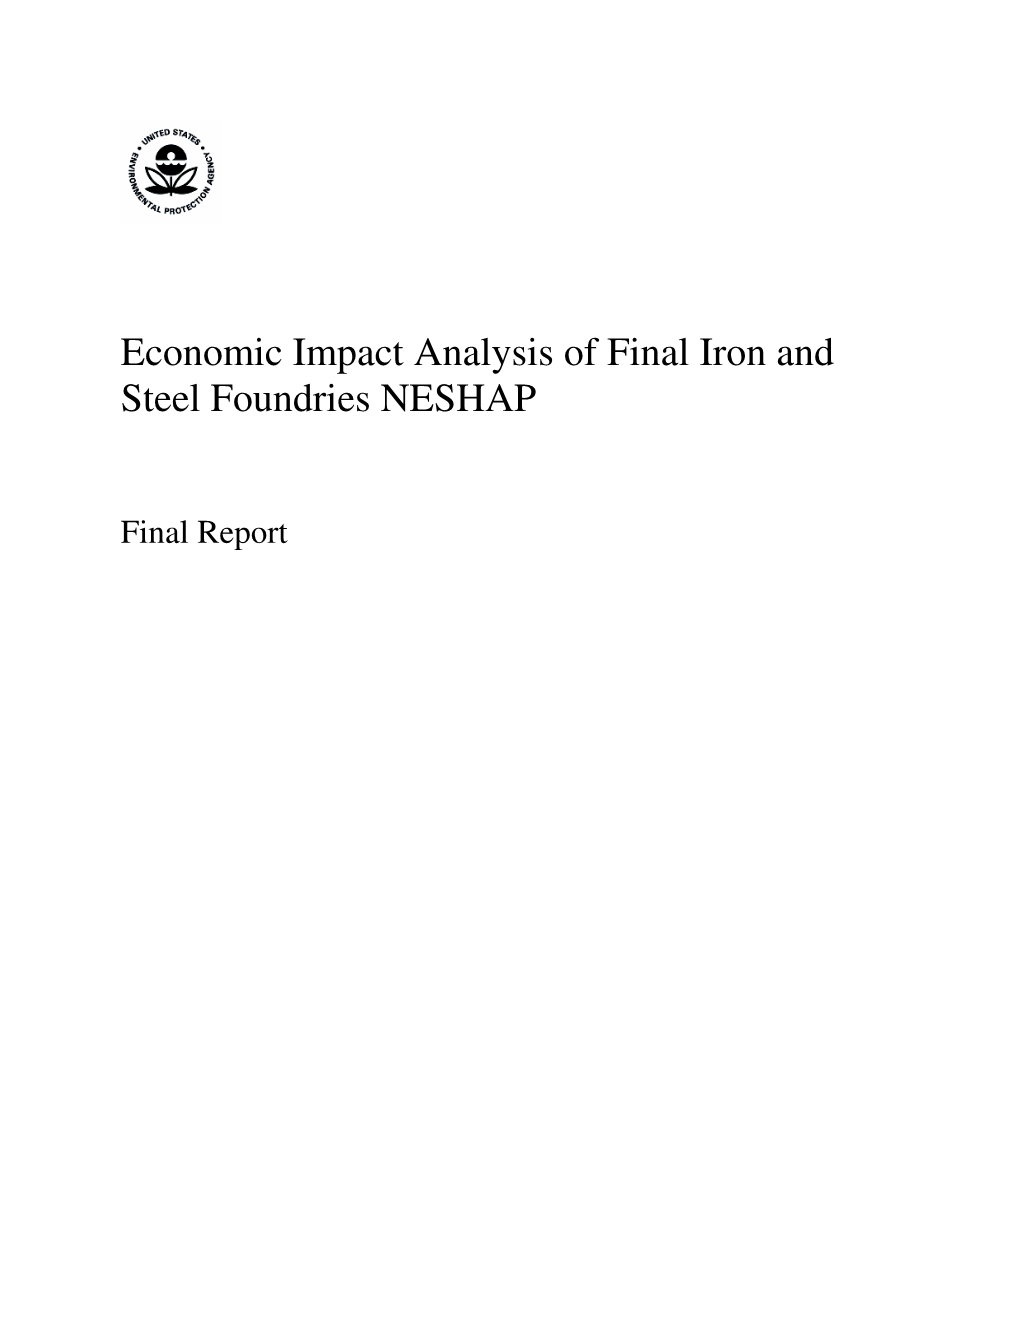 Economic Impact Analysis of Final Iron and Steel Foundries NESHAP